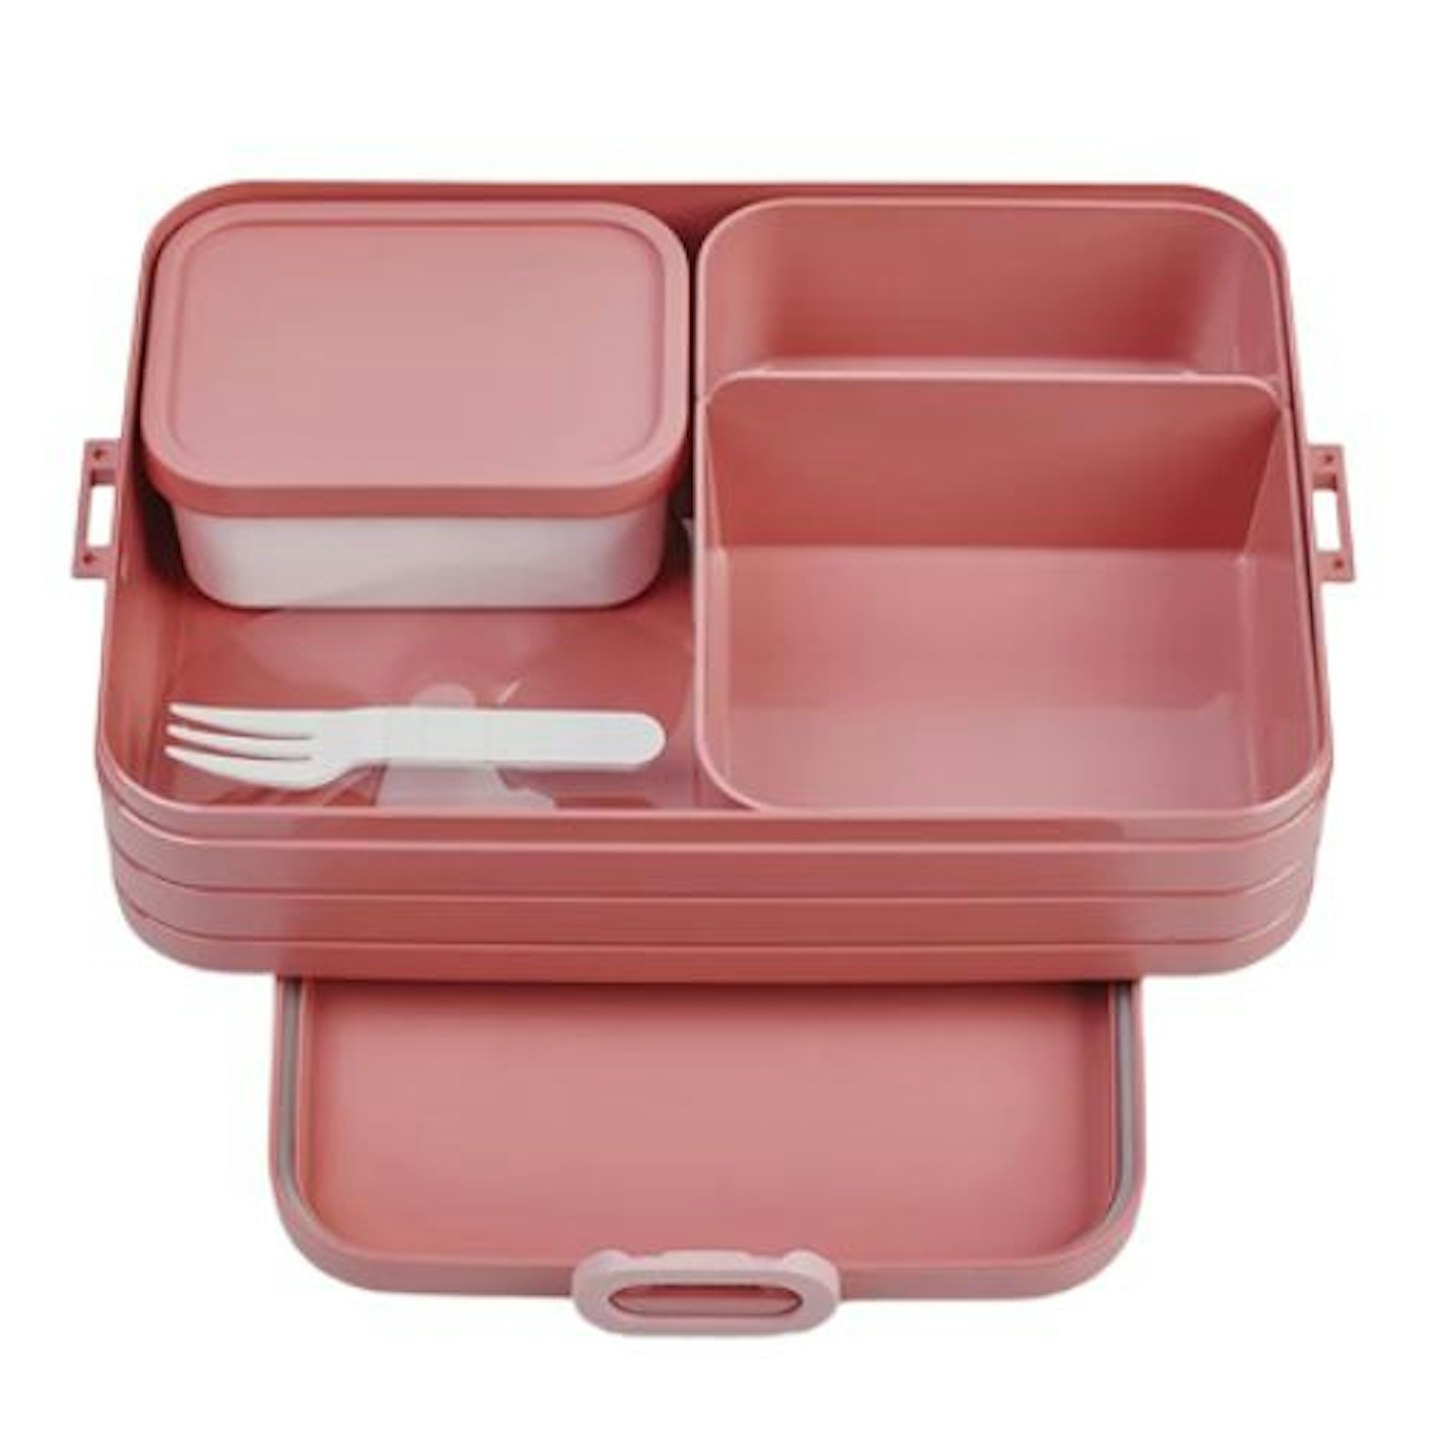 Mepal Bento Lunch Box